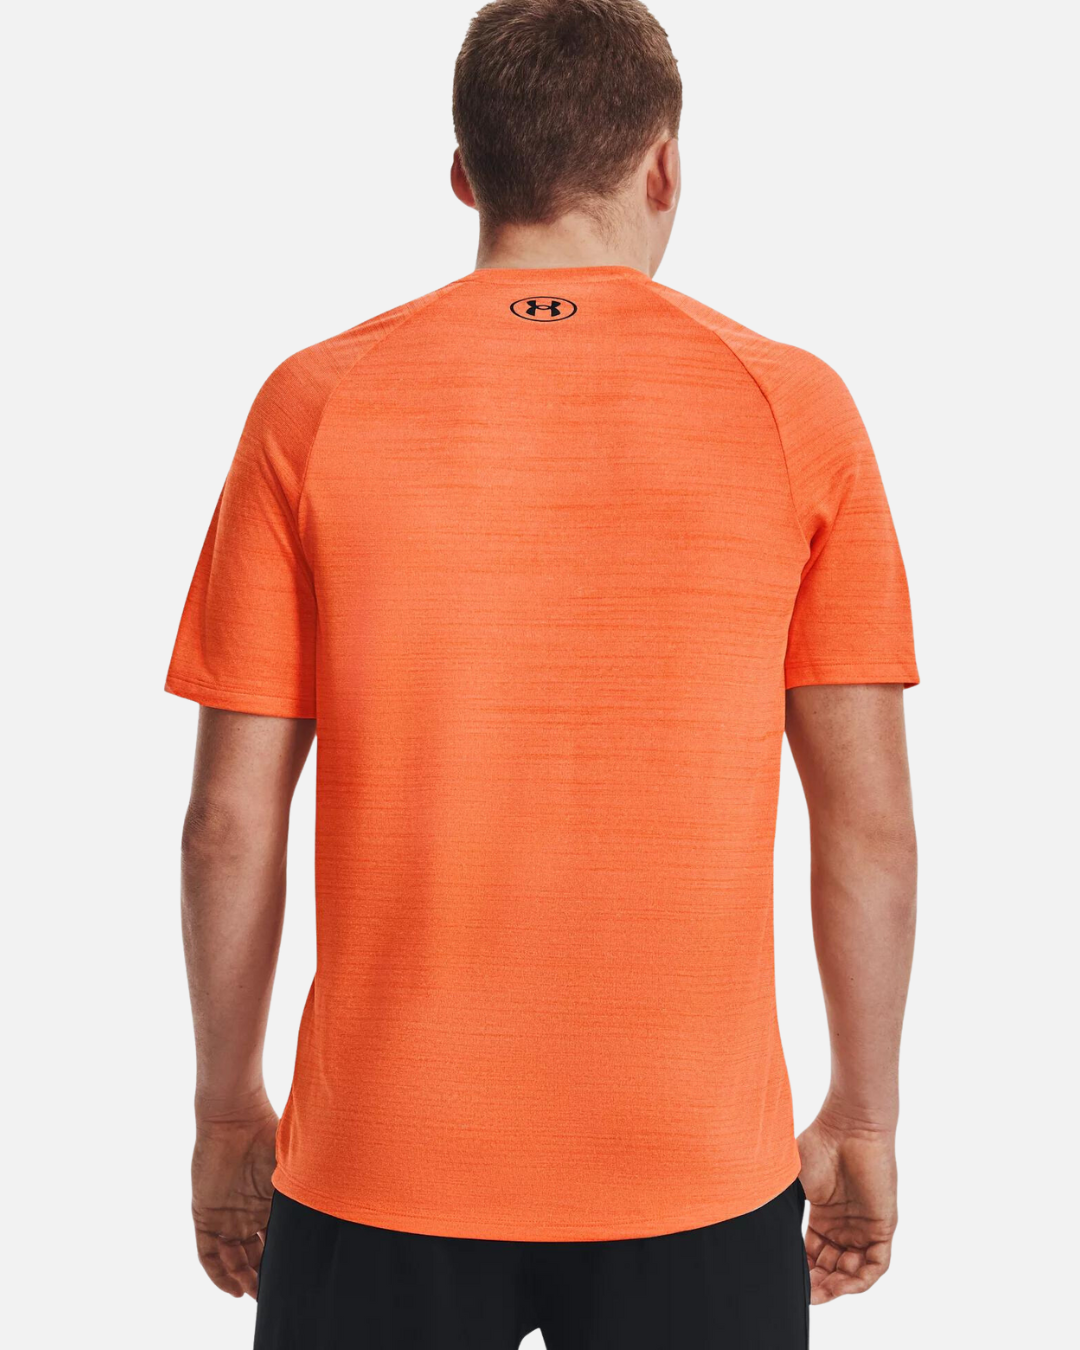 Under Armor Tiger Tech 2.0 T-shirt - Orange